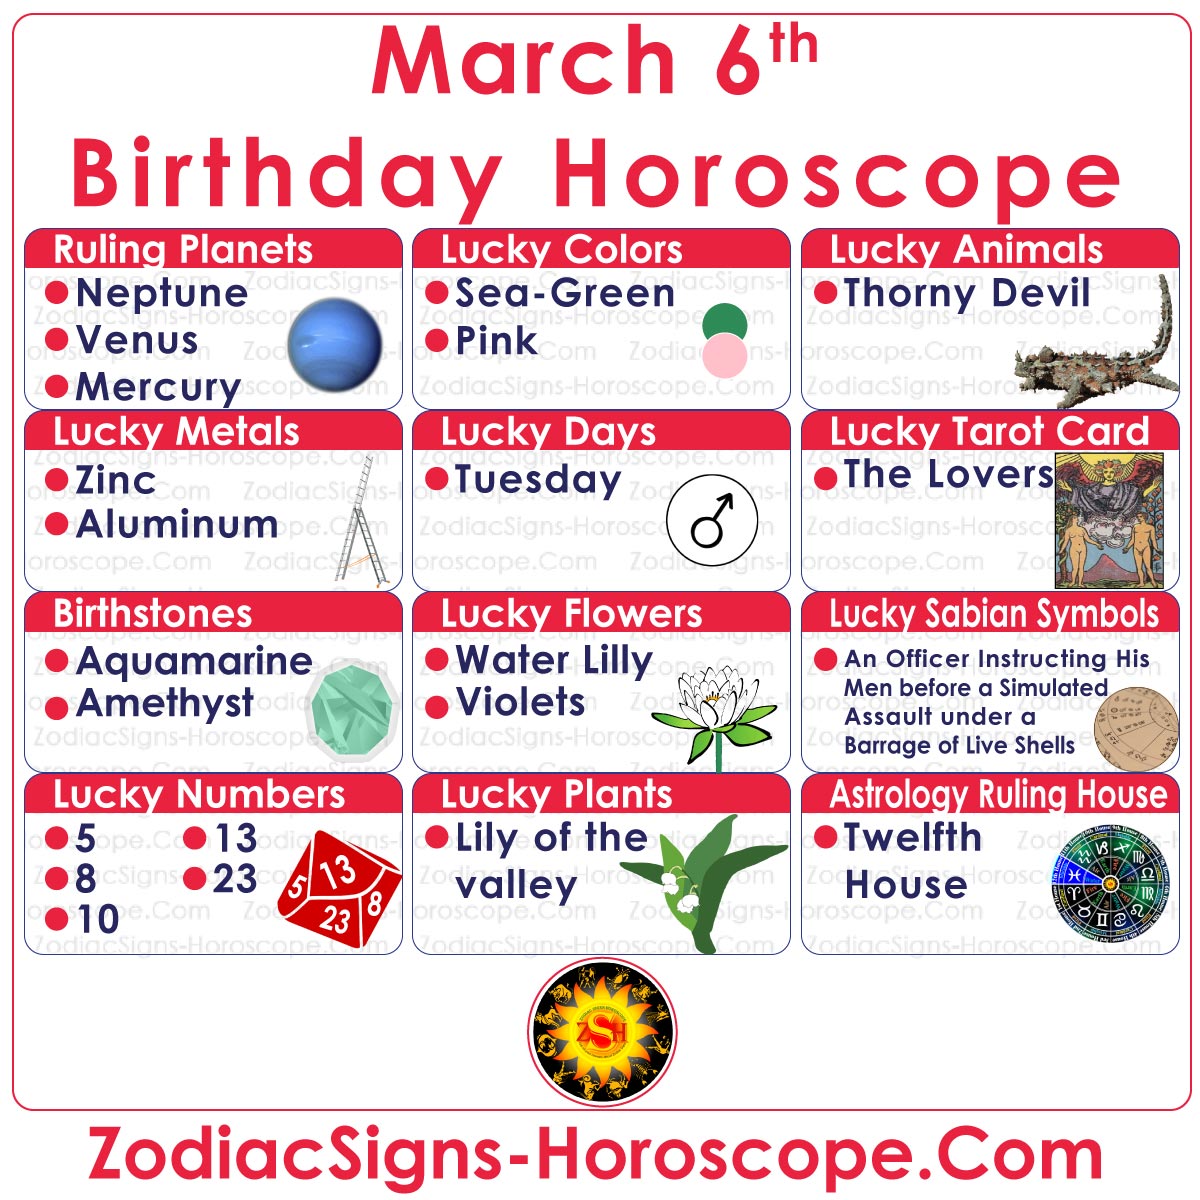 march 6 2021 weekly horoscopes